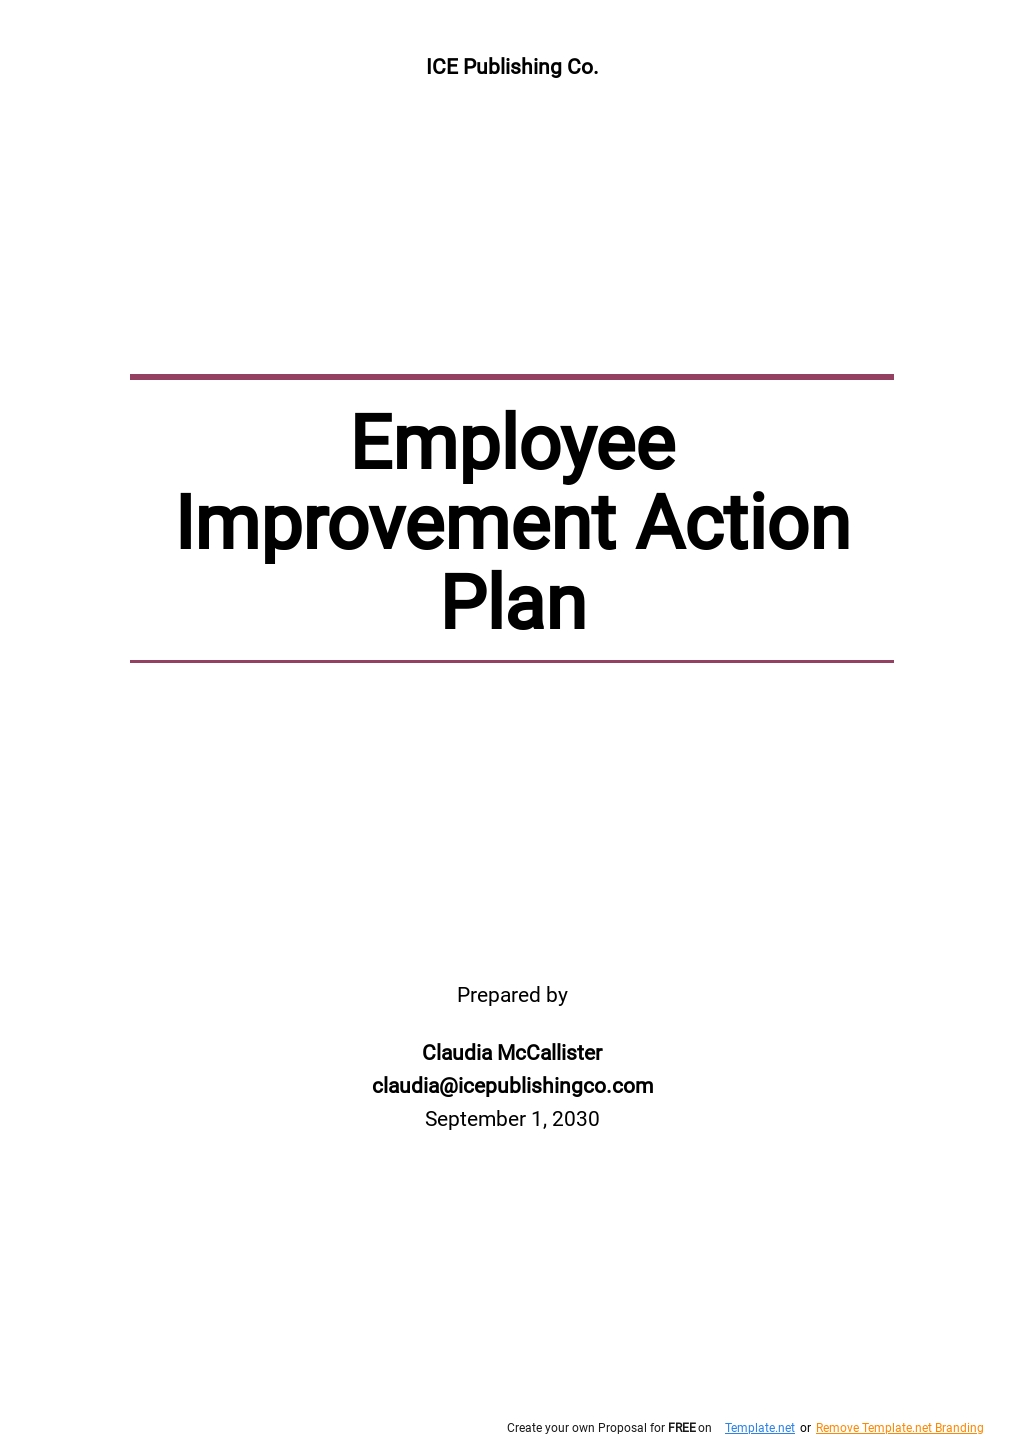 Employee Improvement Action Plan Template